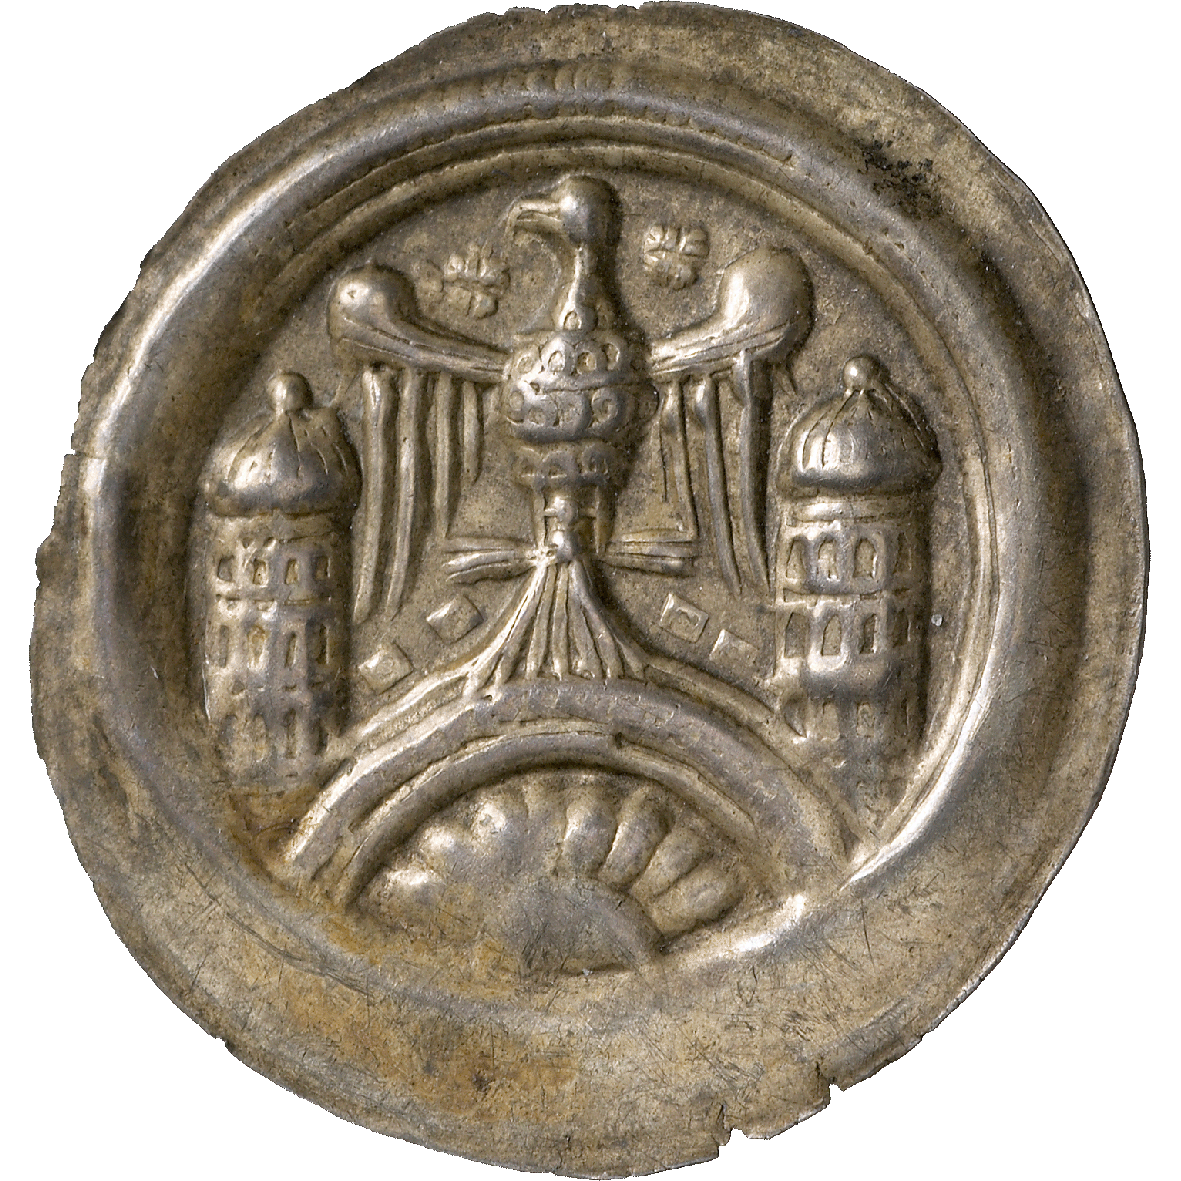 Holy Roman Empire, Walter II of Arnstein, Bracteate (obverse)